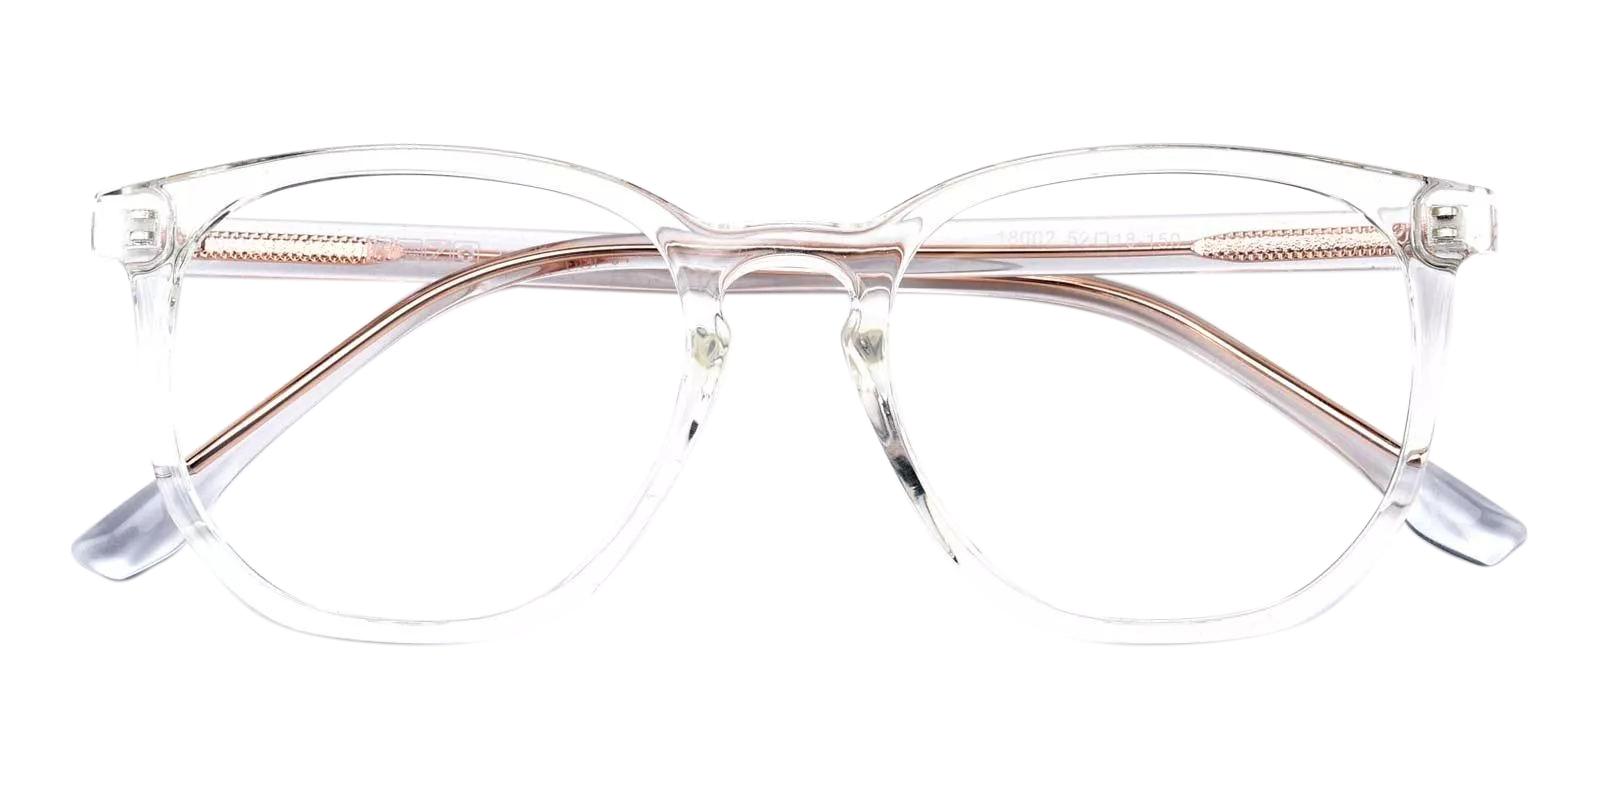 Russell Translucent TR Eyeglasses , Fashion , UniversalBridgeFit Frames from ABBE Glasses